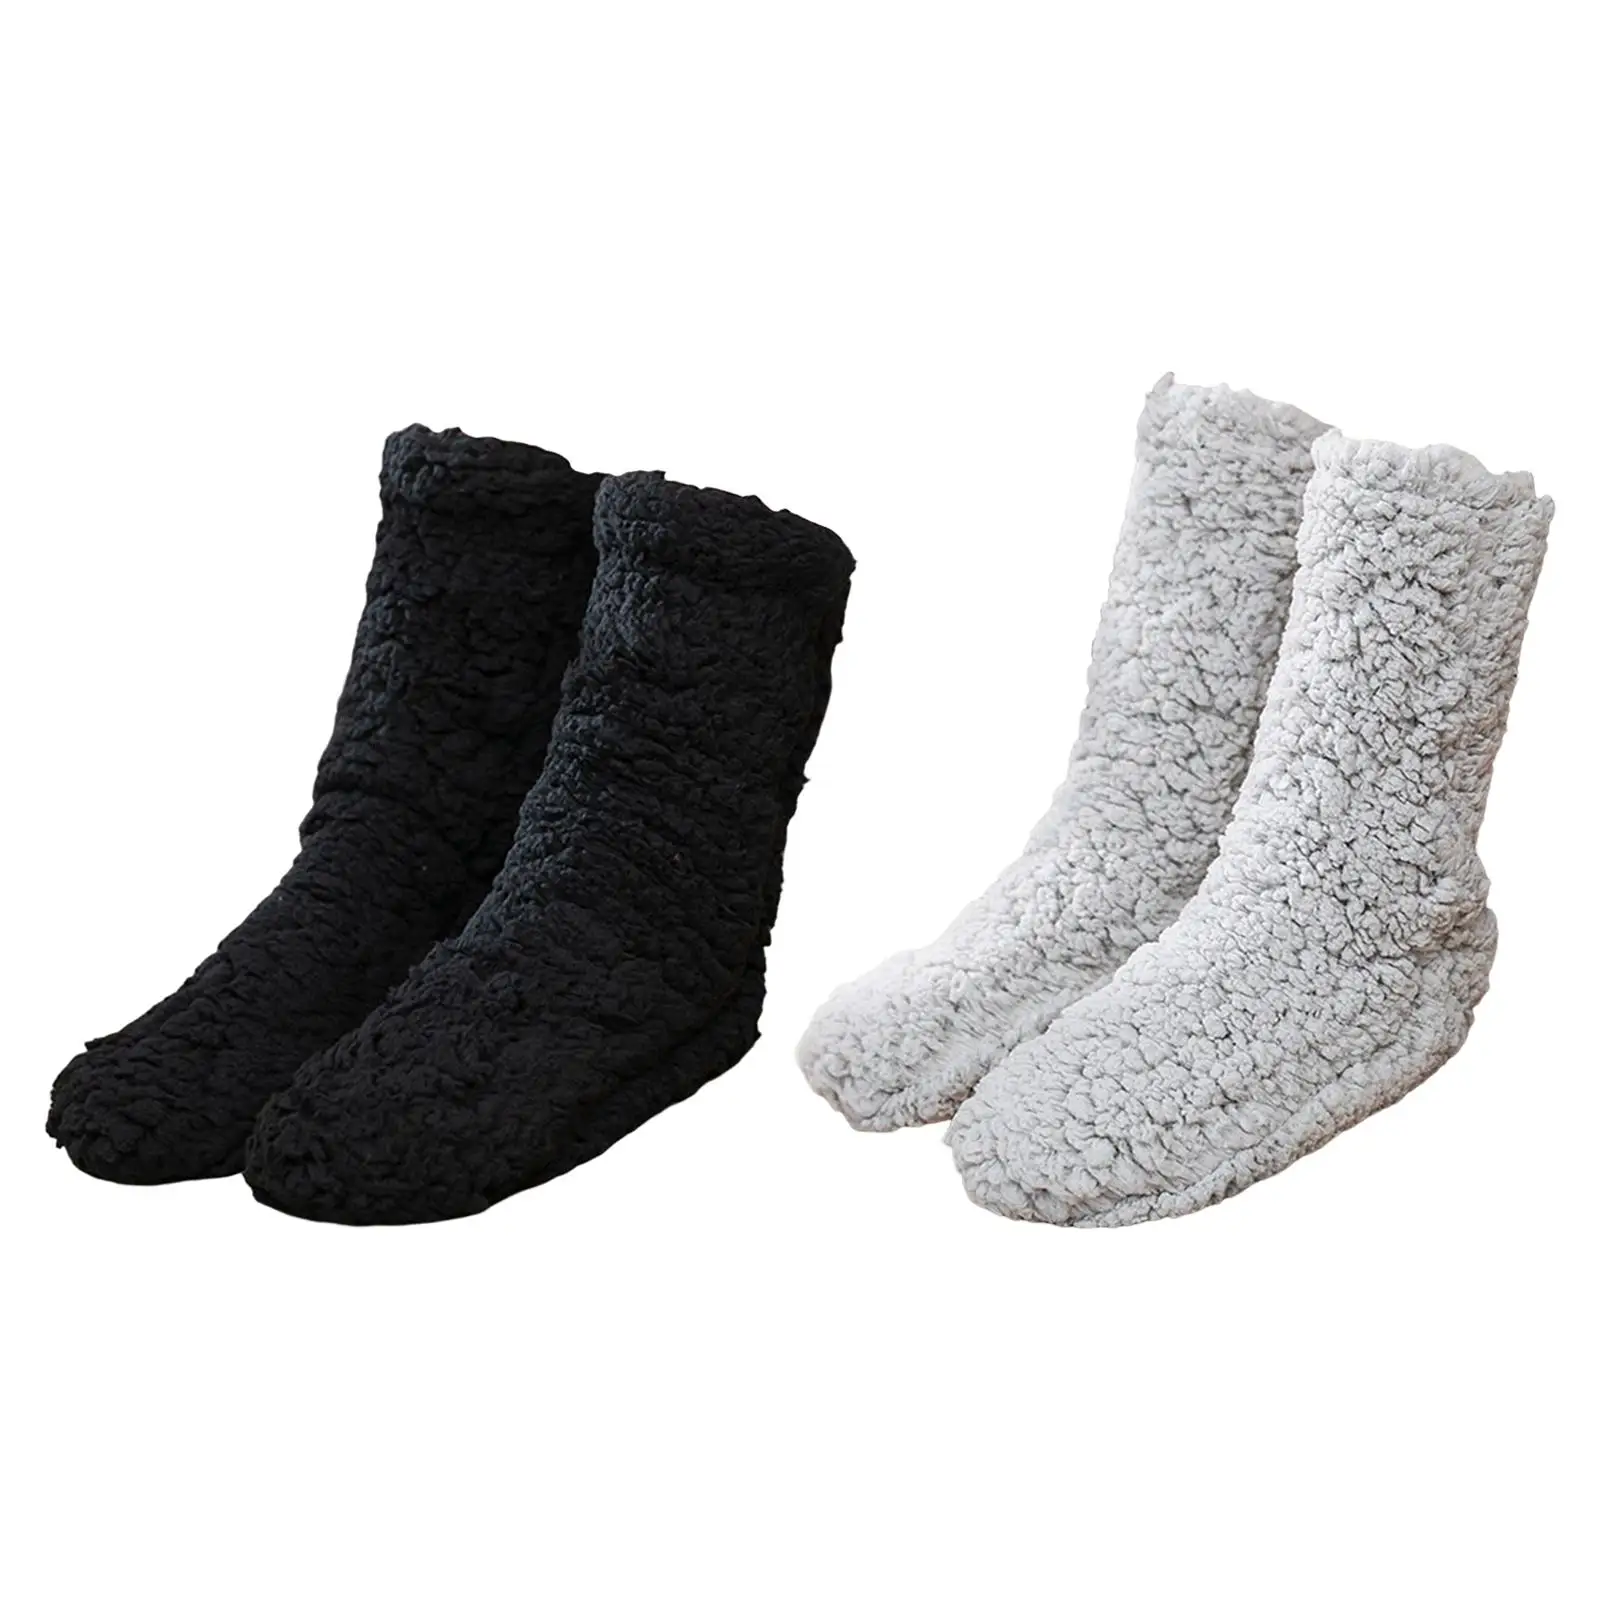 Winter Warm Socks Thermal Socks Indoor Slippers Thicken Soft Comfortable